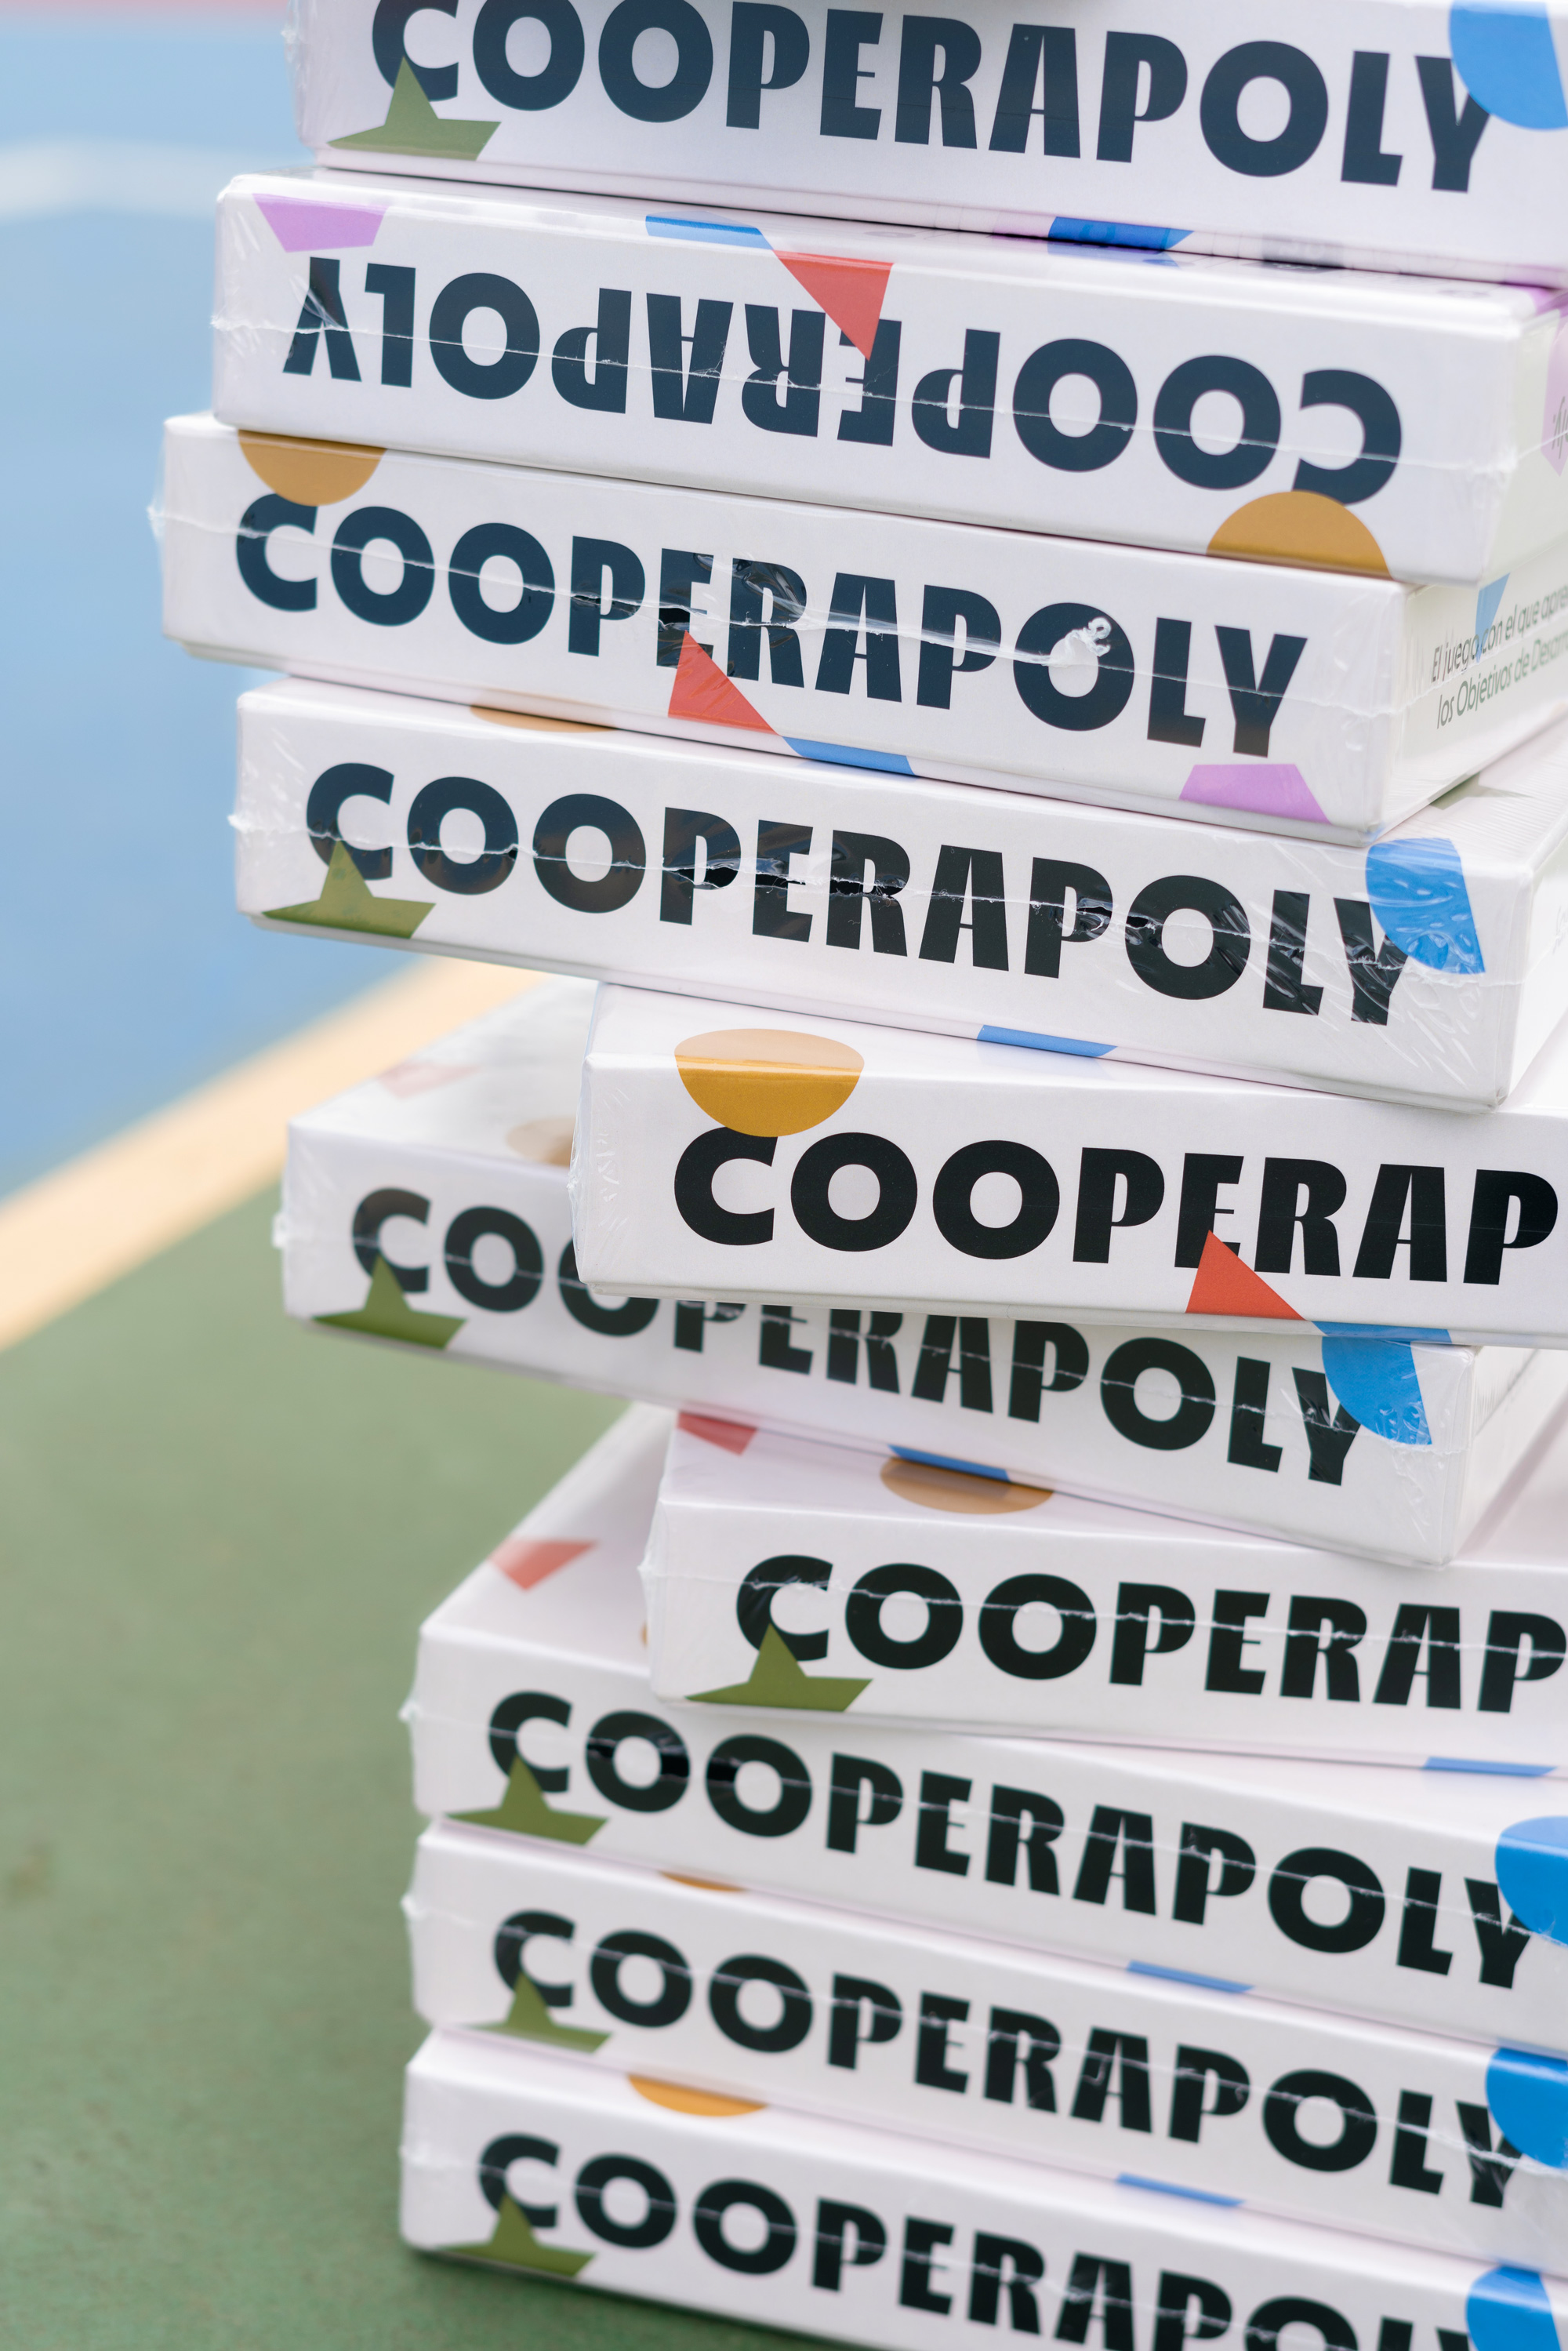 Cooperapoly by Clara Briones - Antton Ugarte - Creative Work - $i